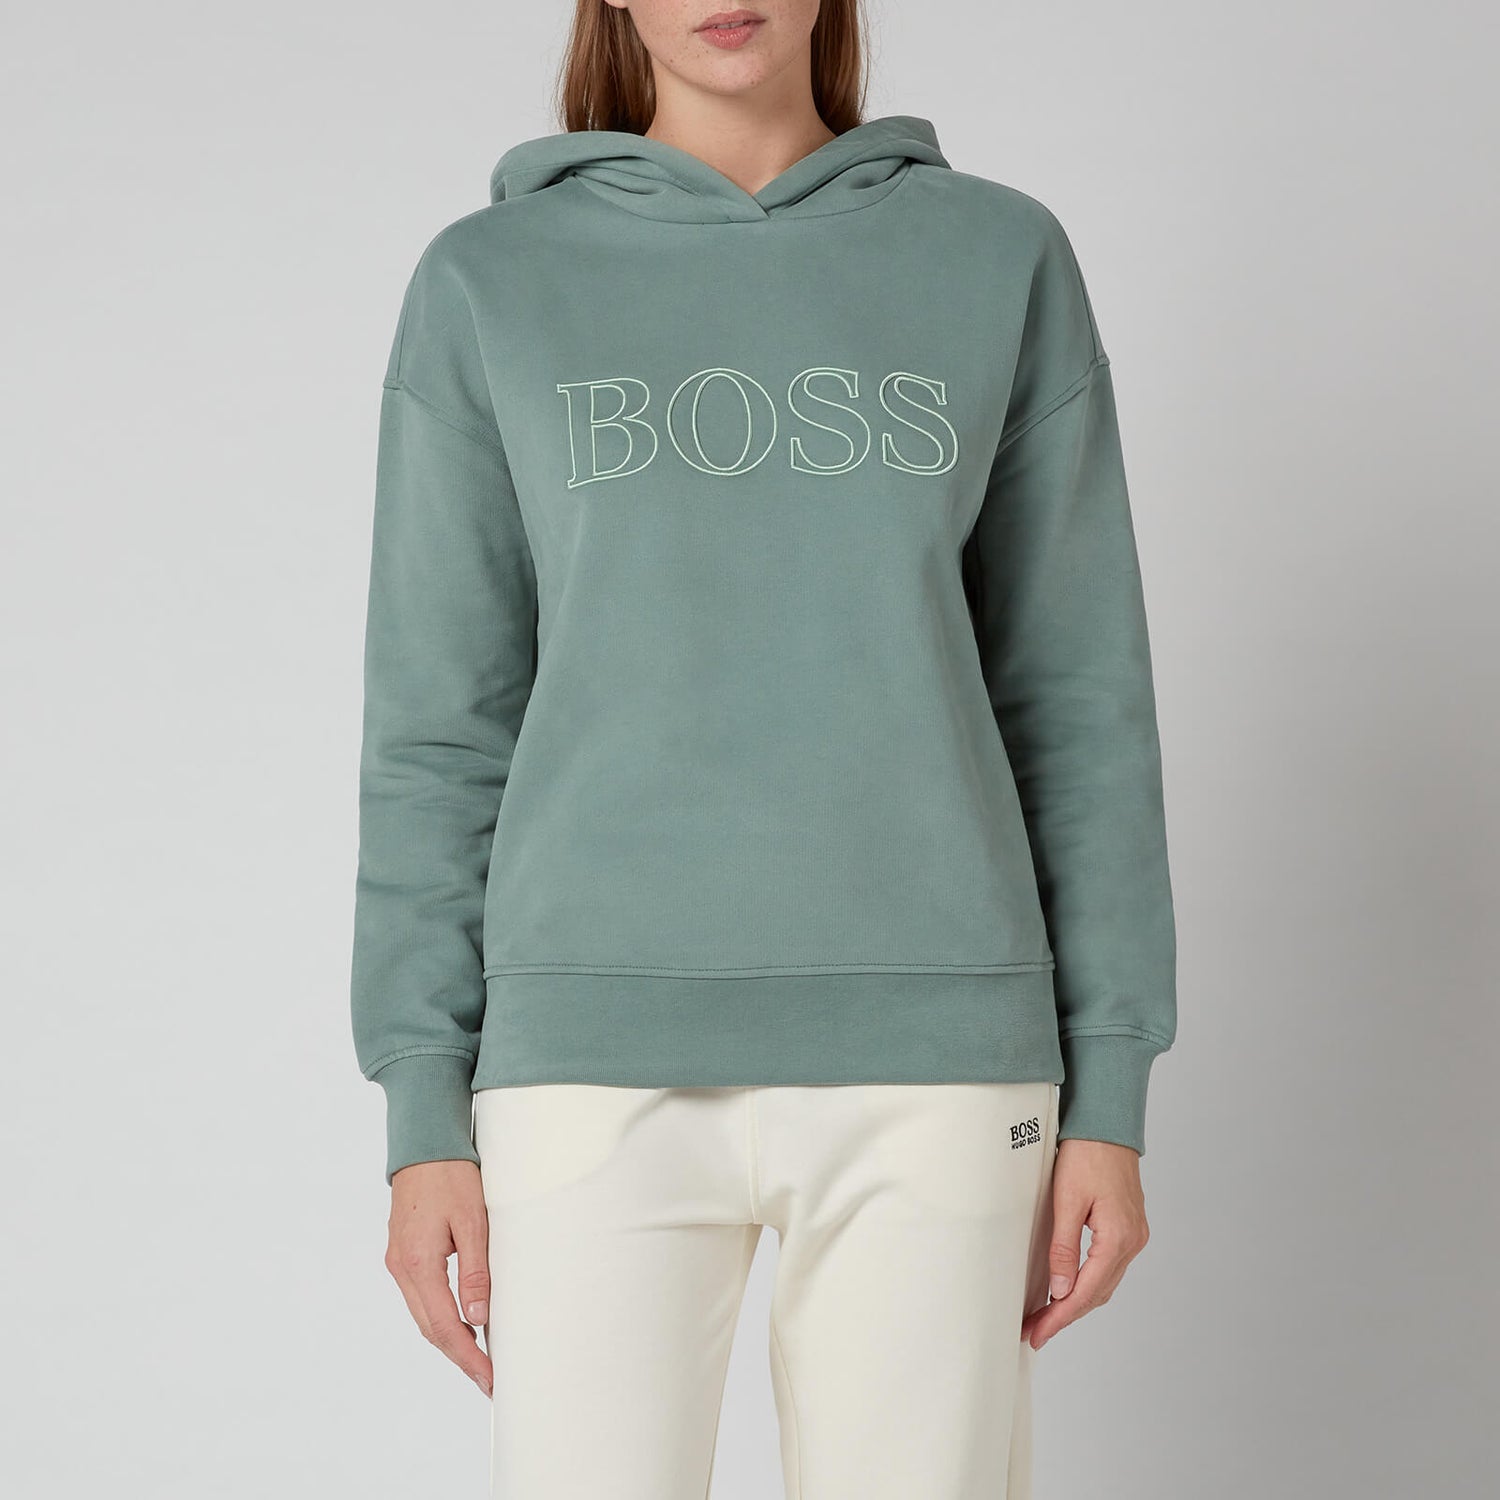 BOSS Women's Efessa Hoodie - Light/Pastel Green